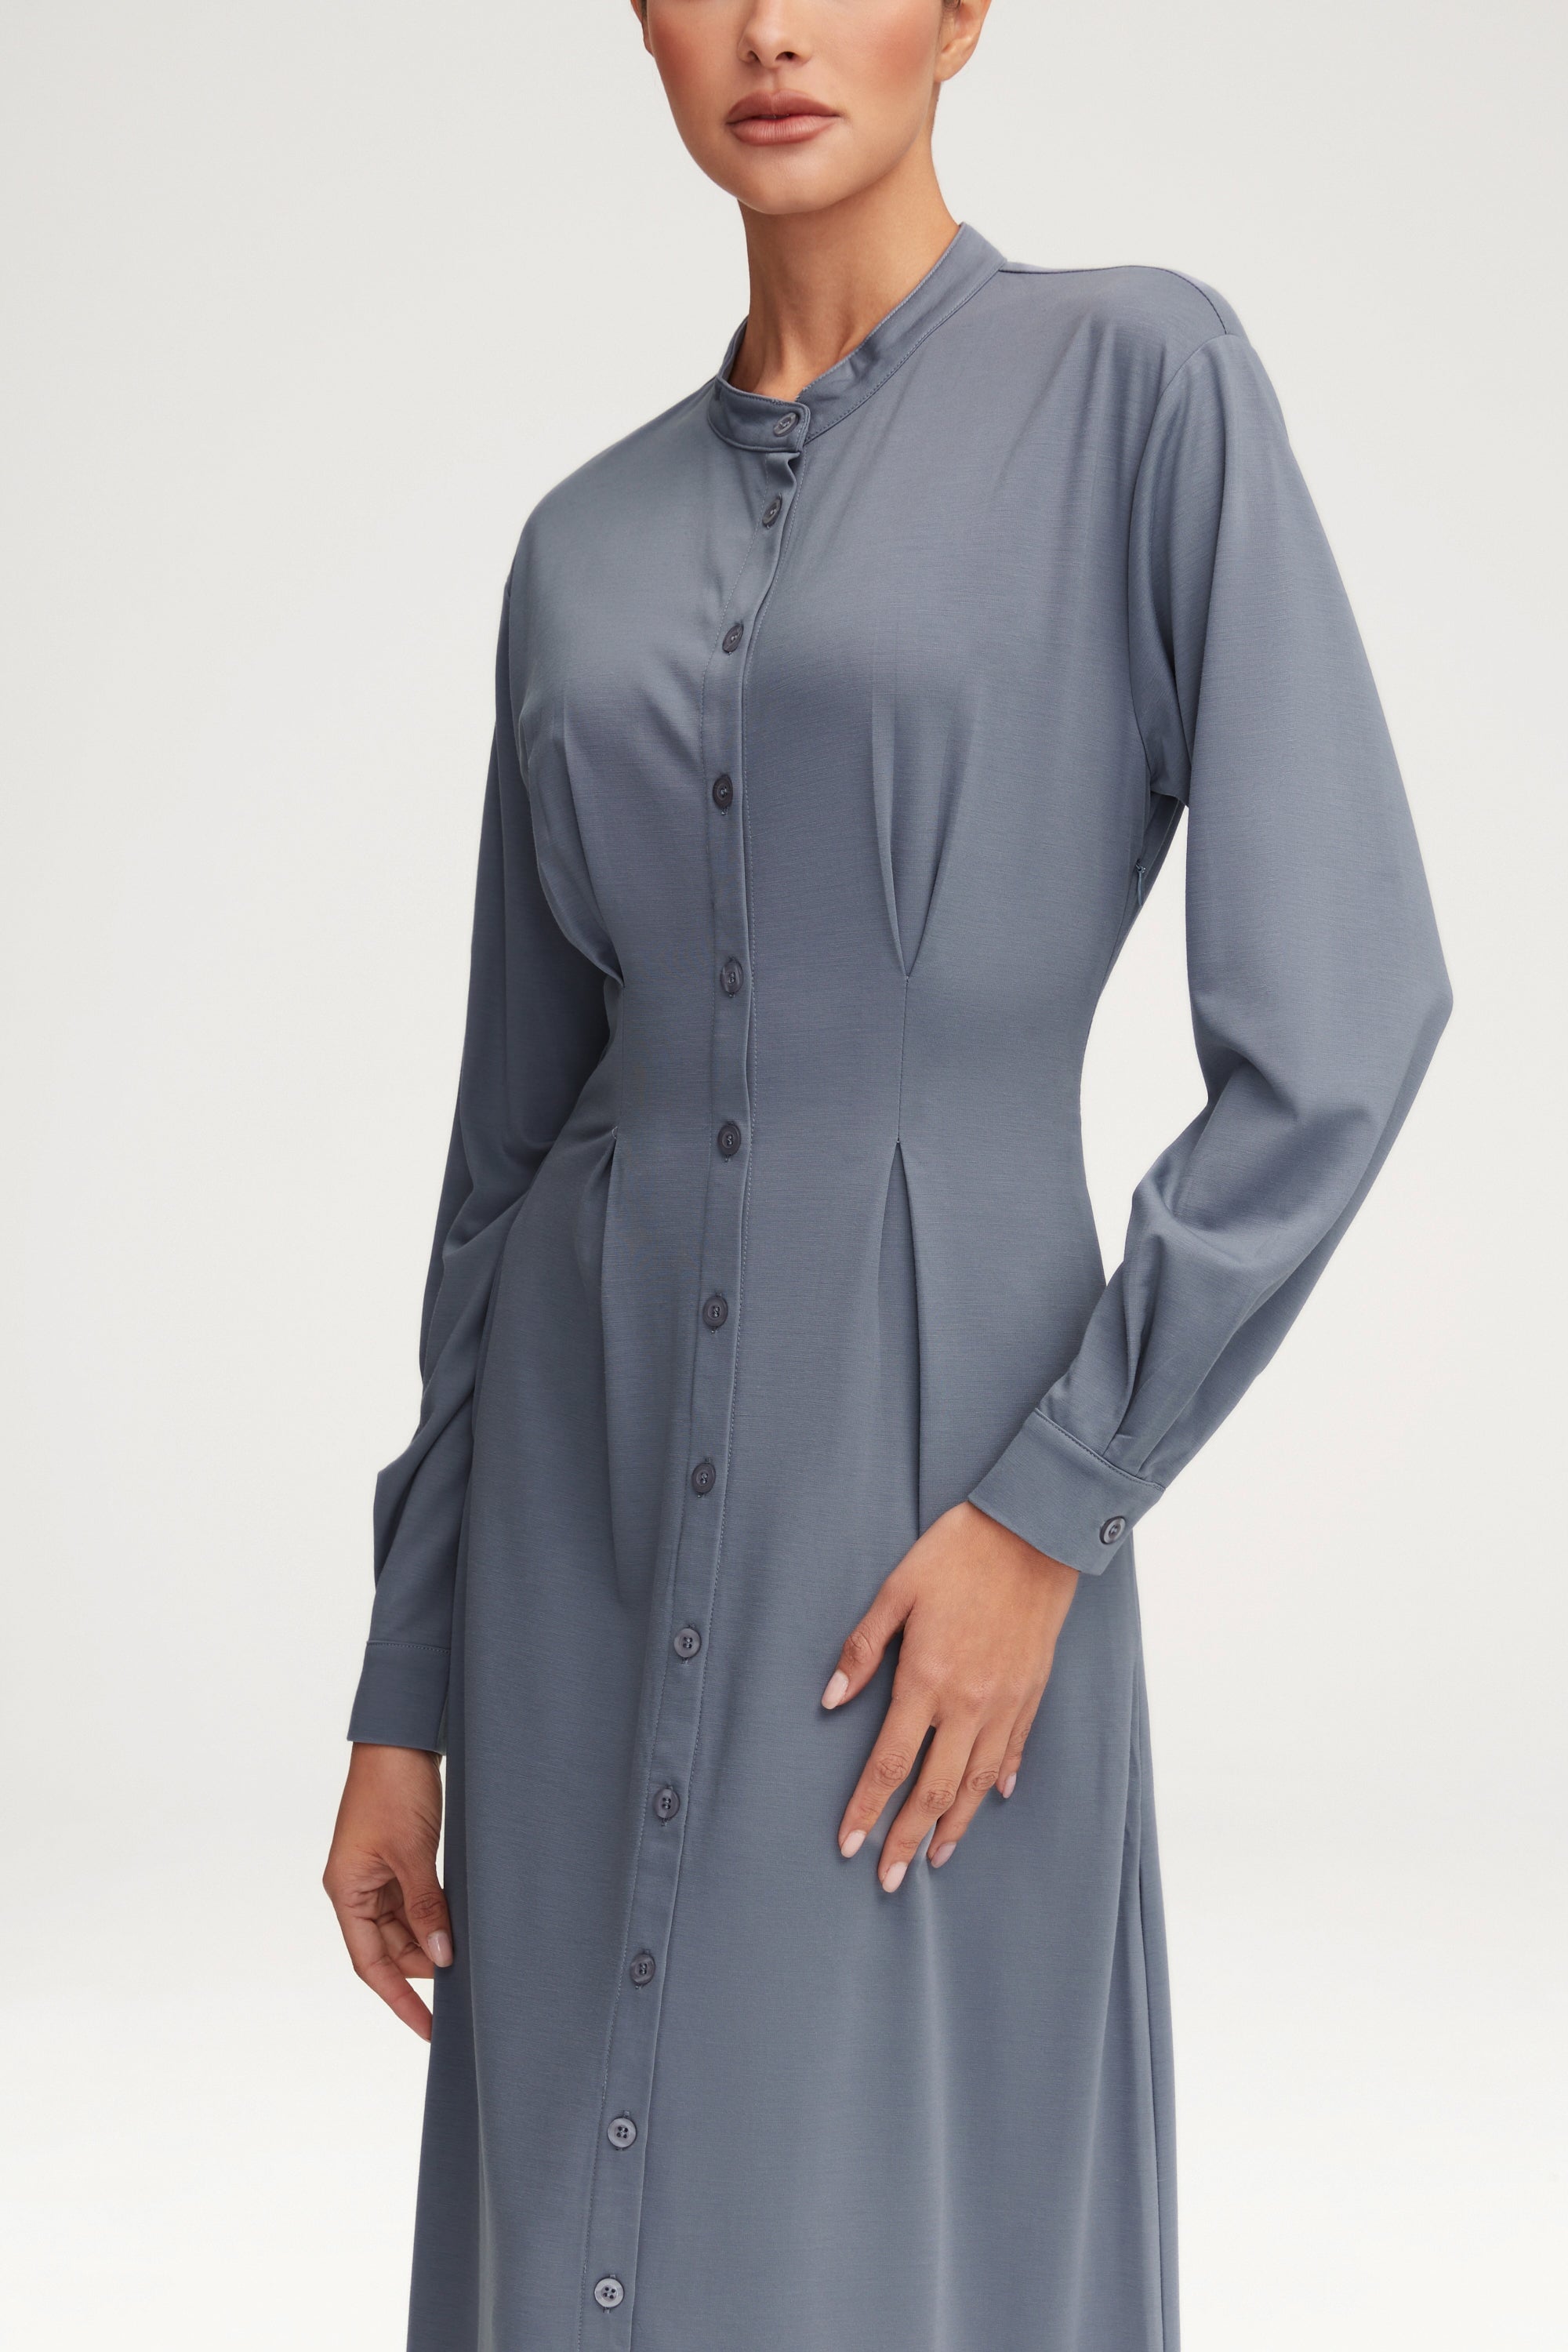 Ivy Jersey Button Down Maxi Dress - Dusk Blue Clothing epschoolboard 